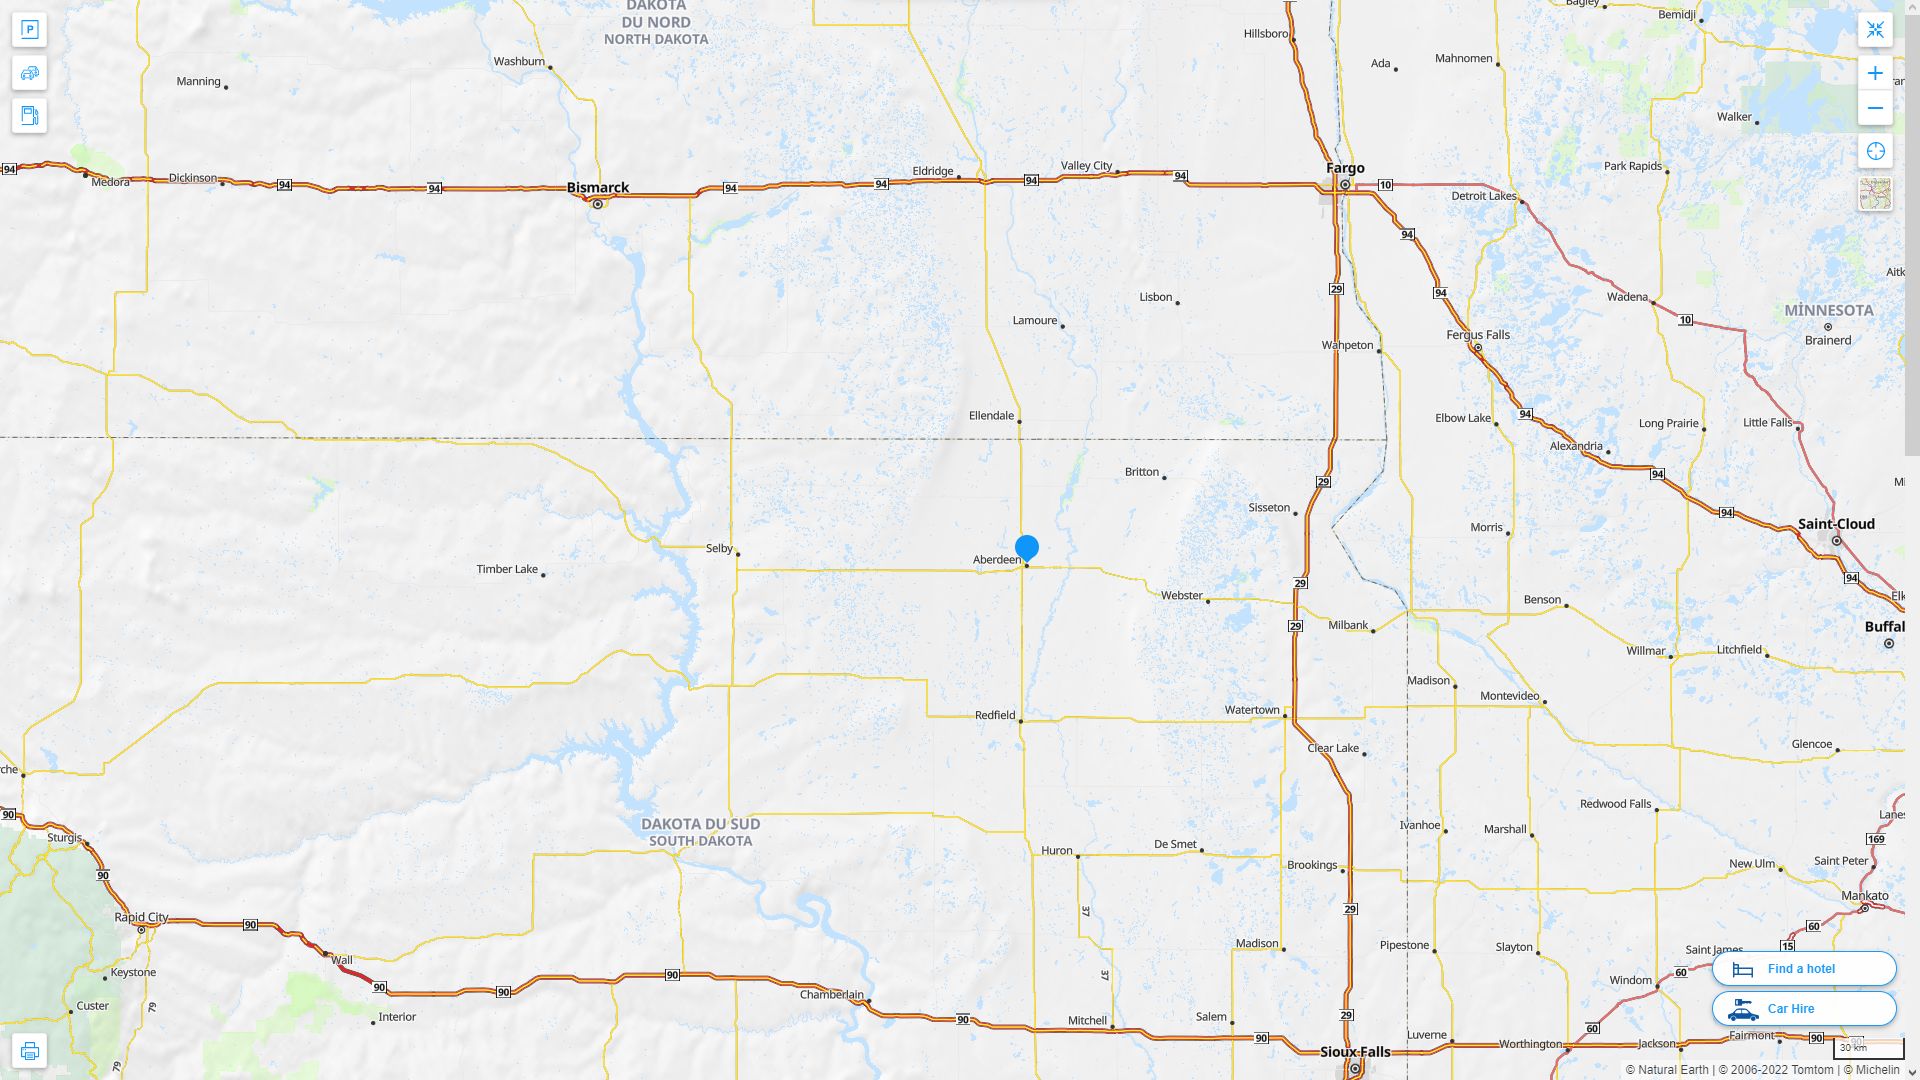 Aberdeen South Dakota Highway and Road Map